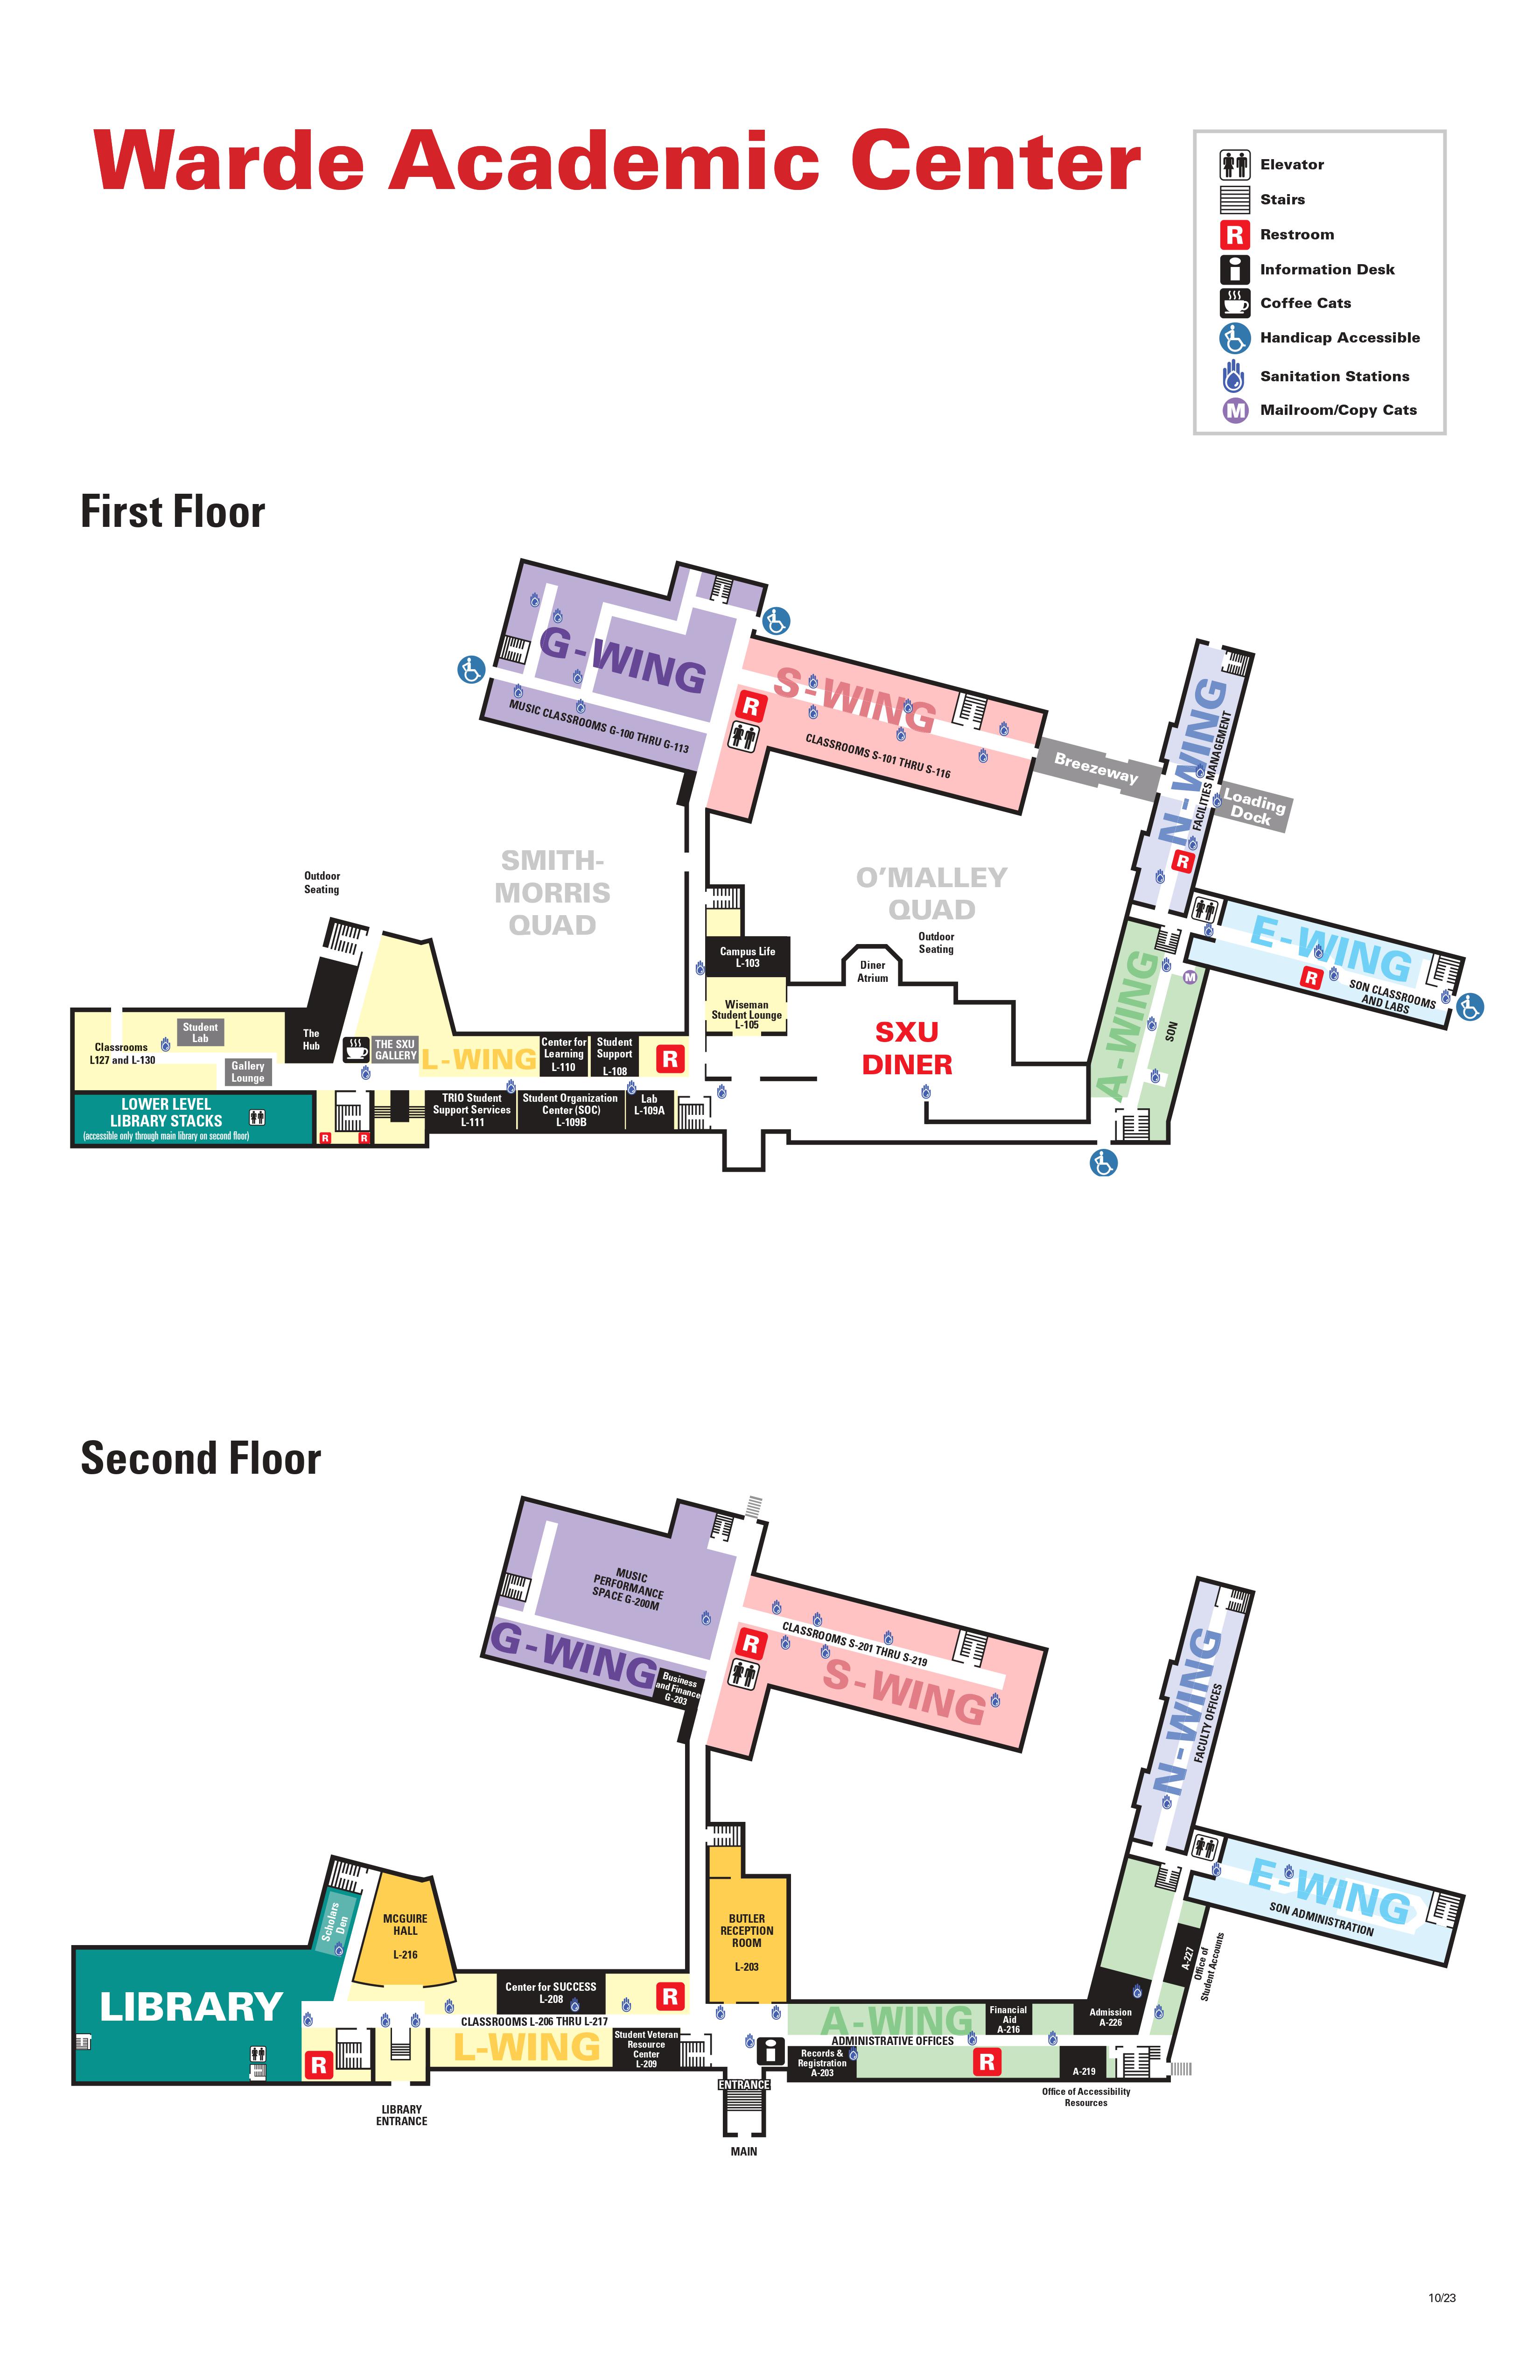 Warde Academic Center Map, Floors 1-2